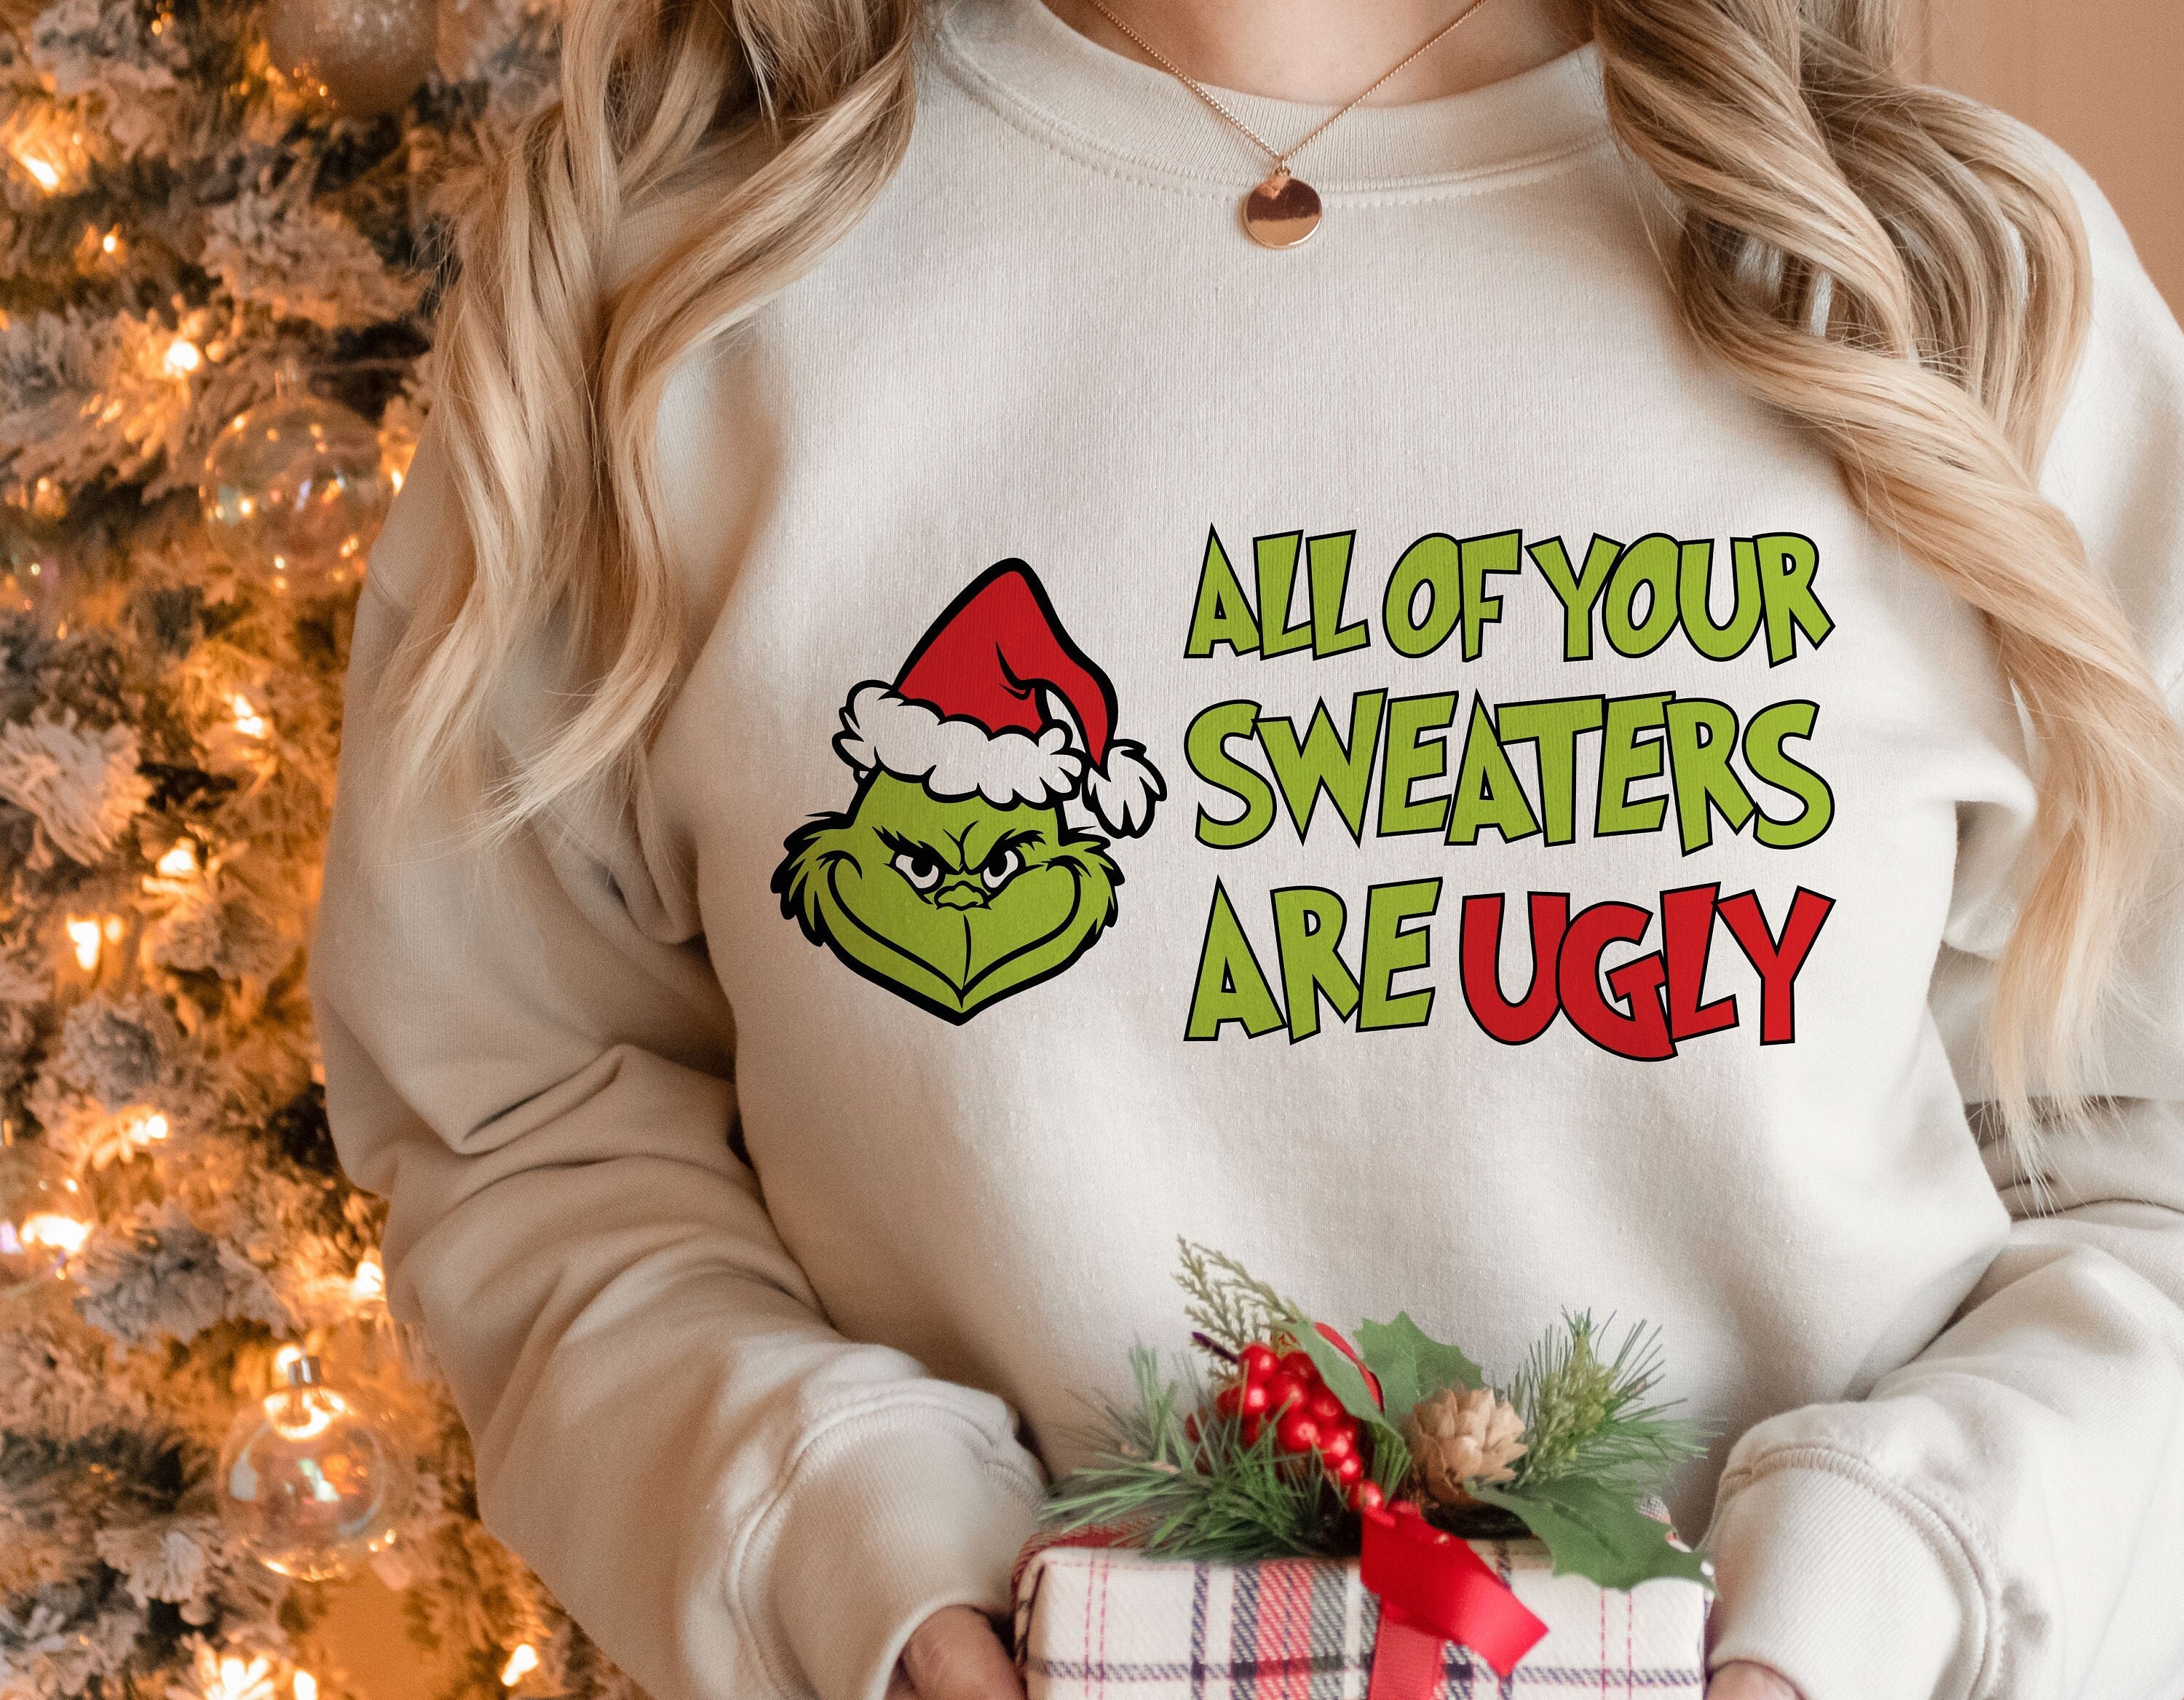 MLB Logo Atlanta Braves Funny Grinch Ugly Christmas Sweater For Men And  Women - Banantees